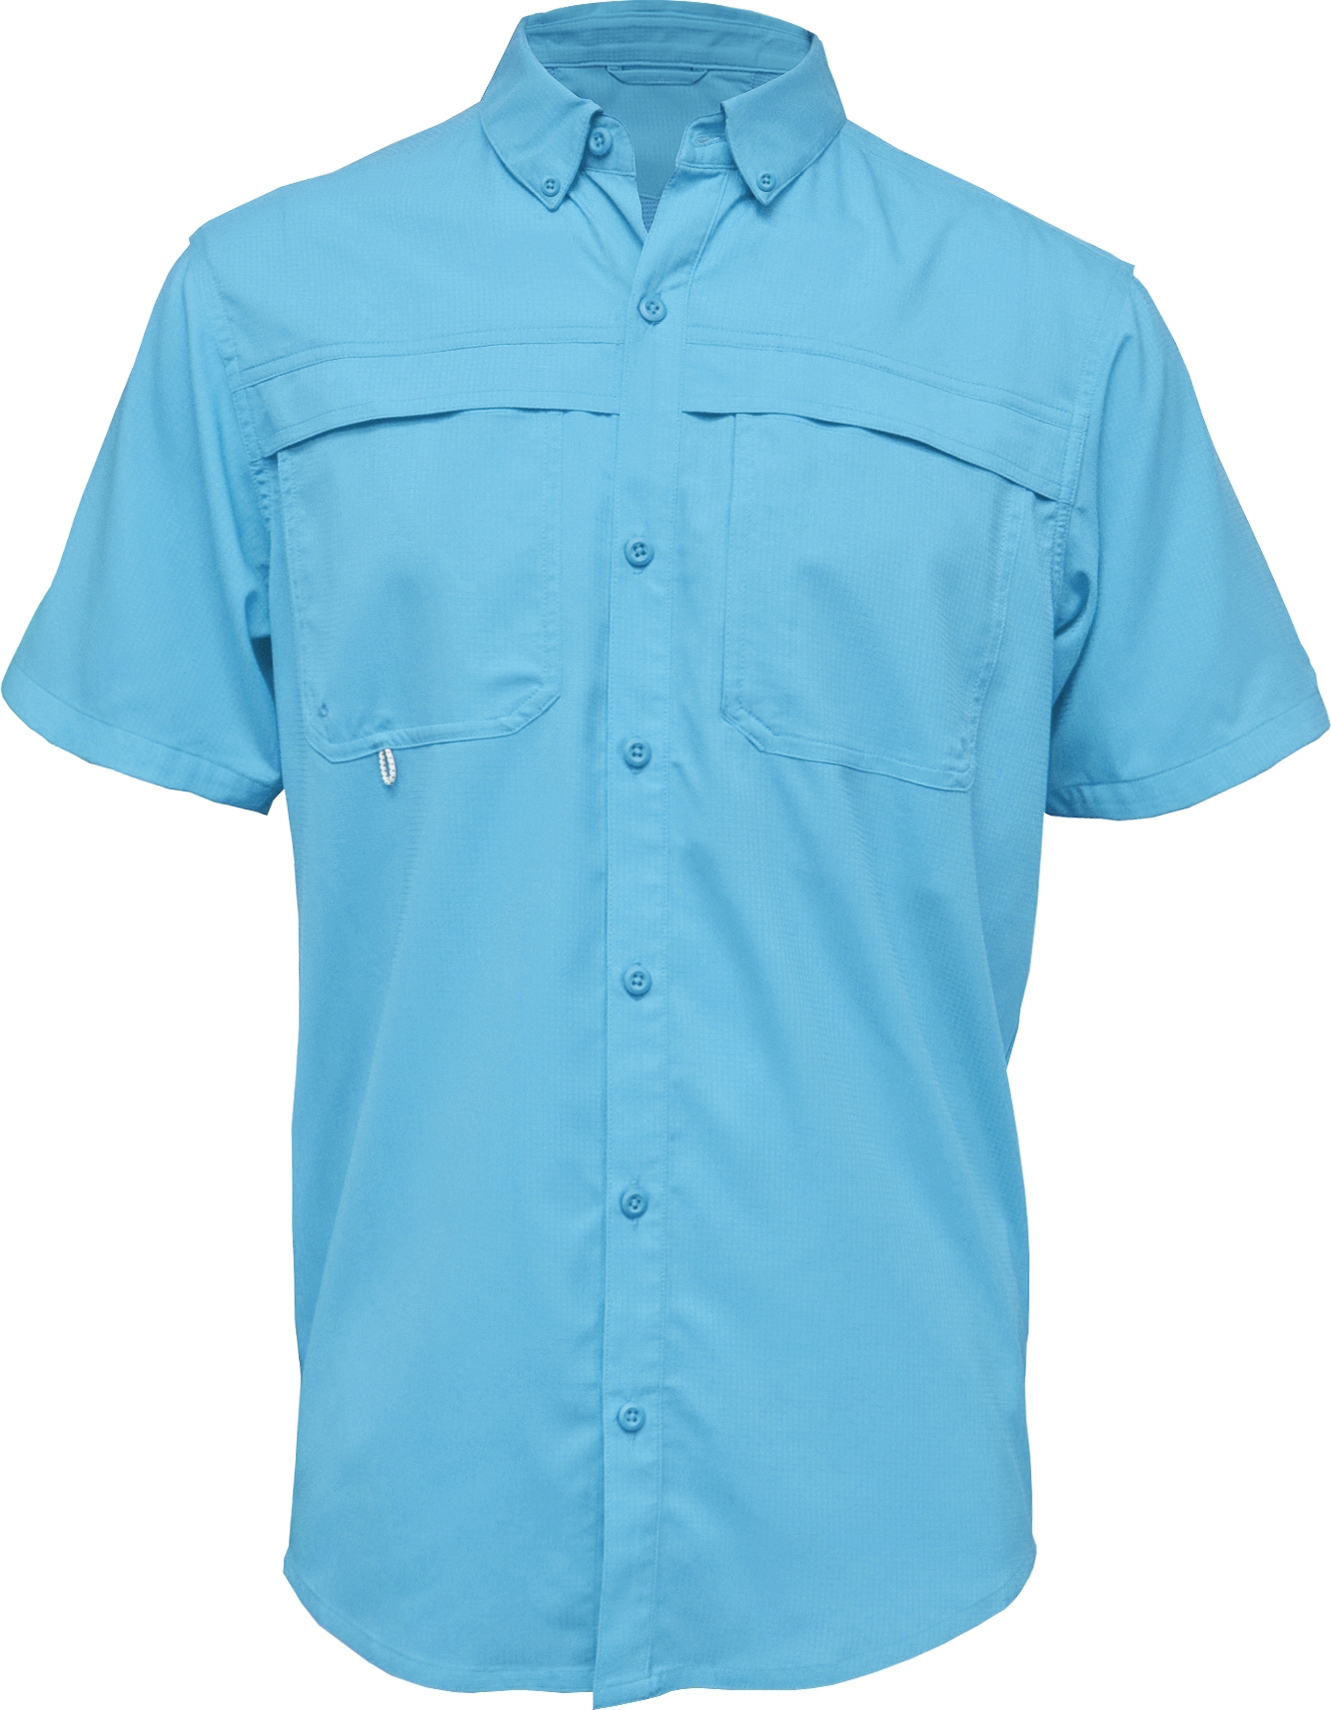 E136303 Baw Adult Short Sleeve Fishing Shirt